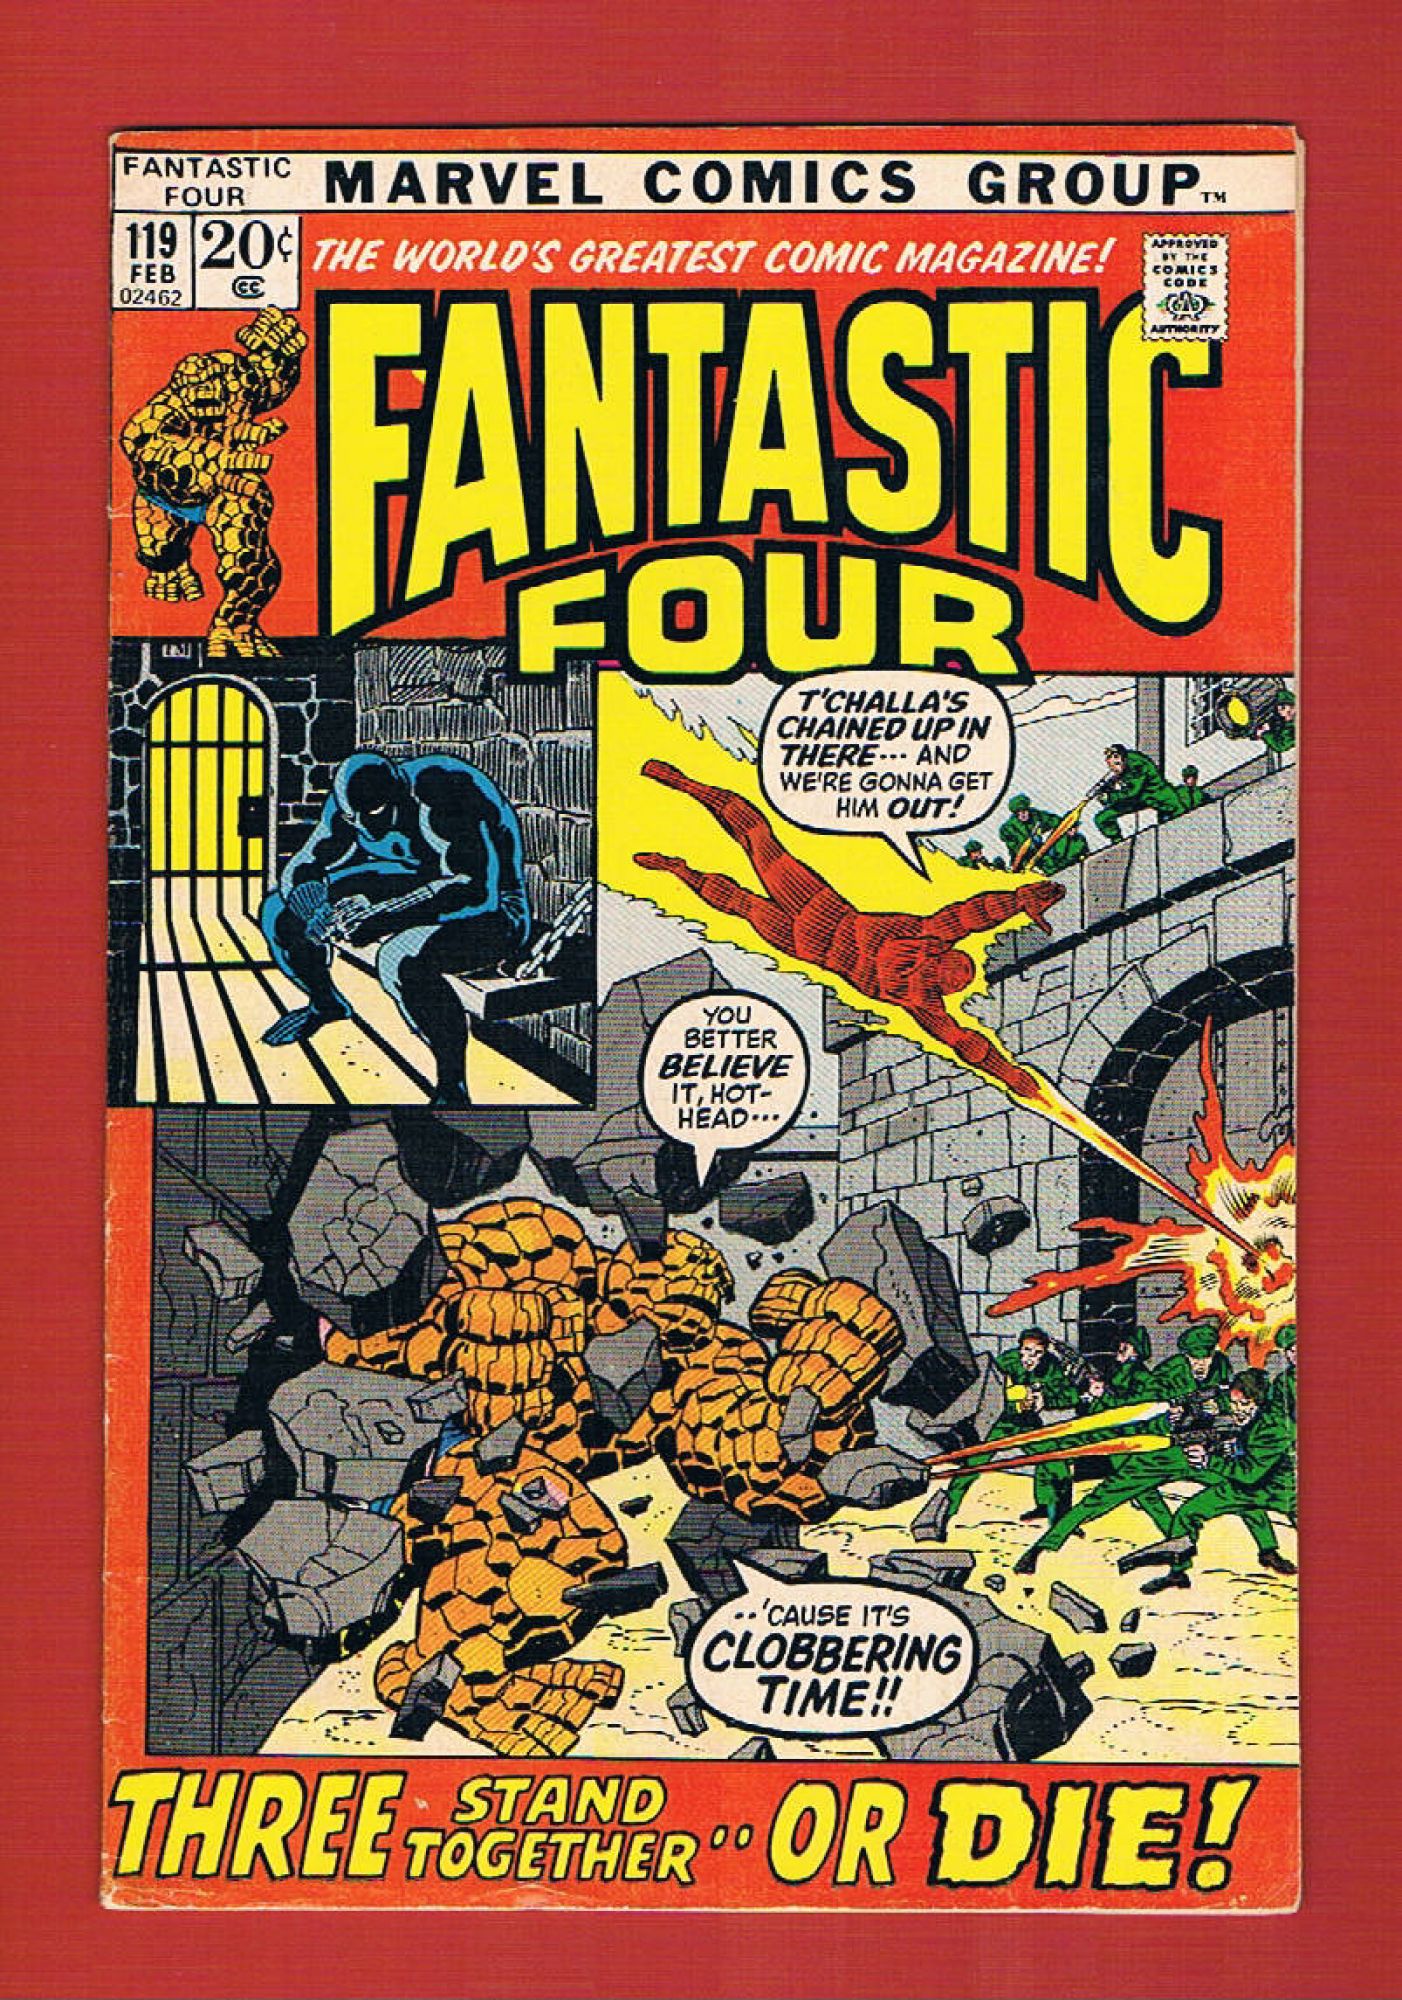 Fantastic Four #119, Feb 1972, 6.5 FN+